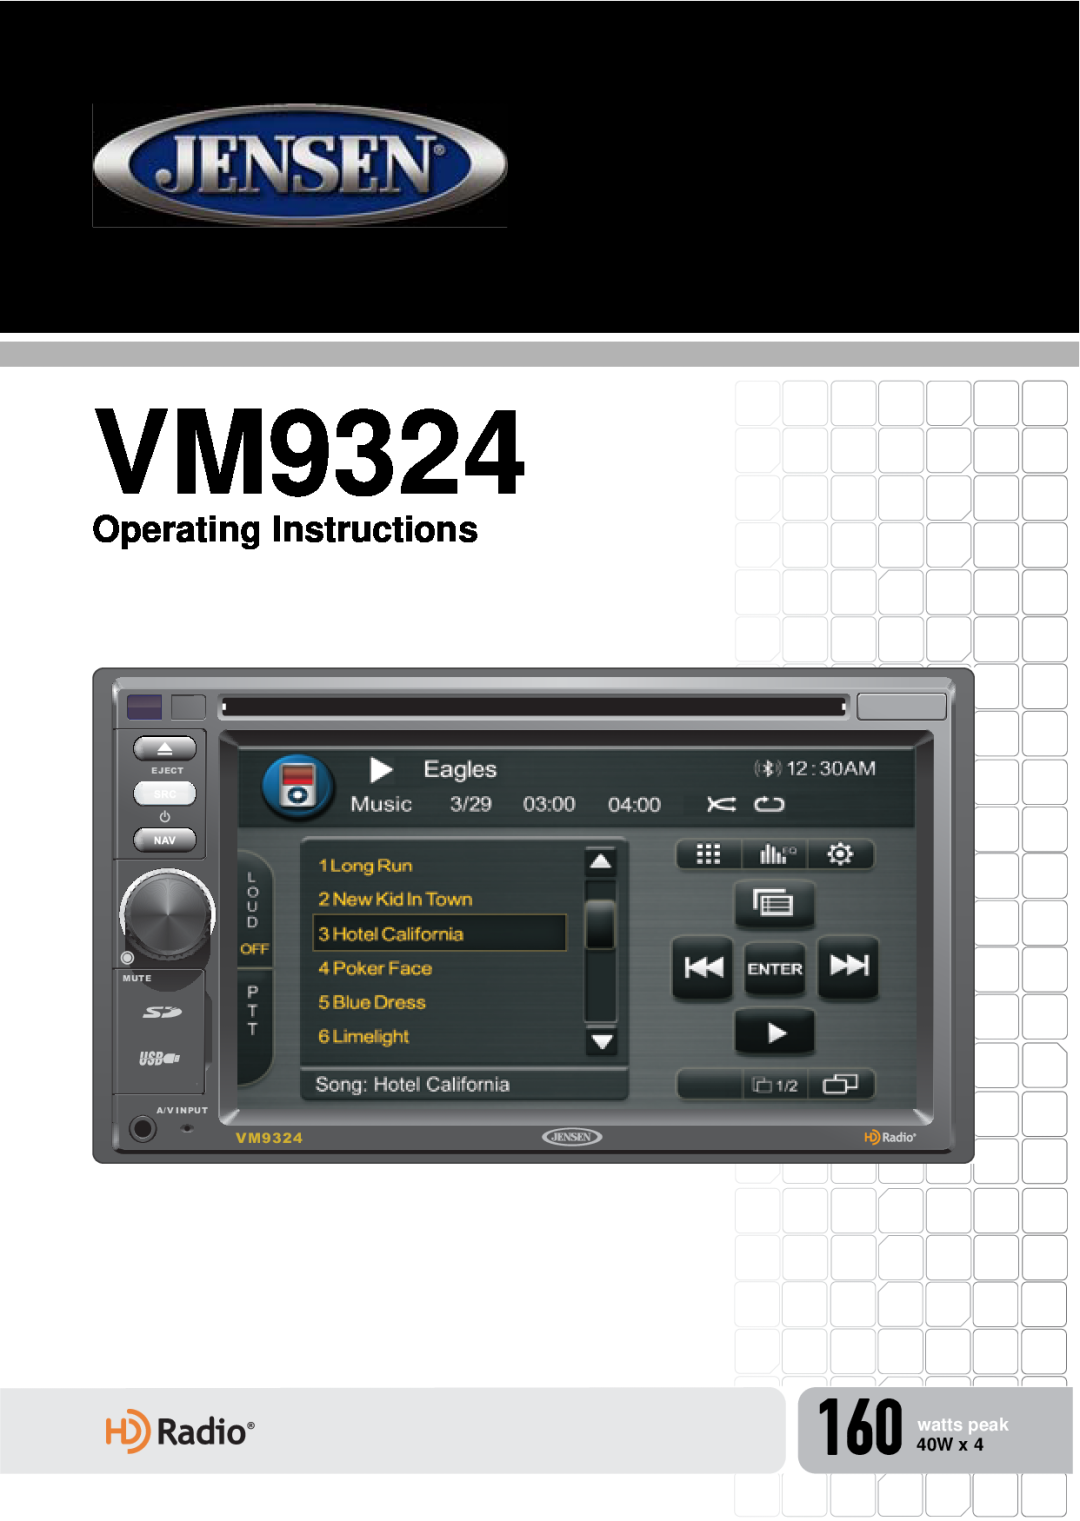 Jensen VM9324 manual Operating Instructions, watts peak, 40W, Eject Mute A/V Input 